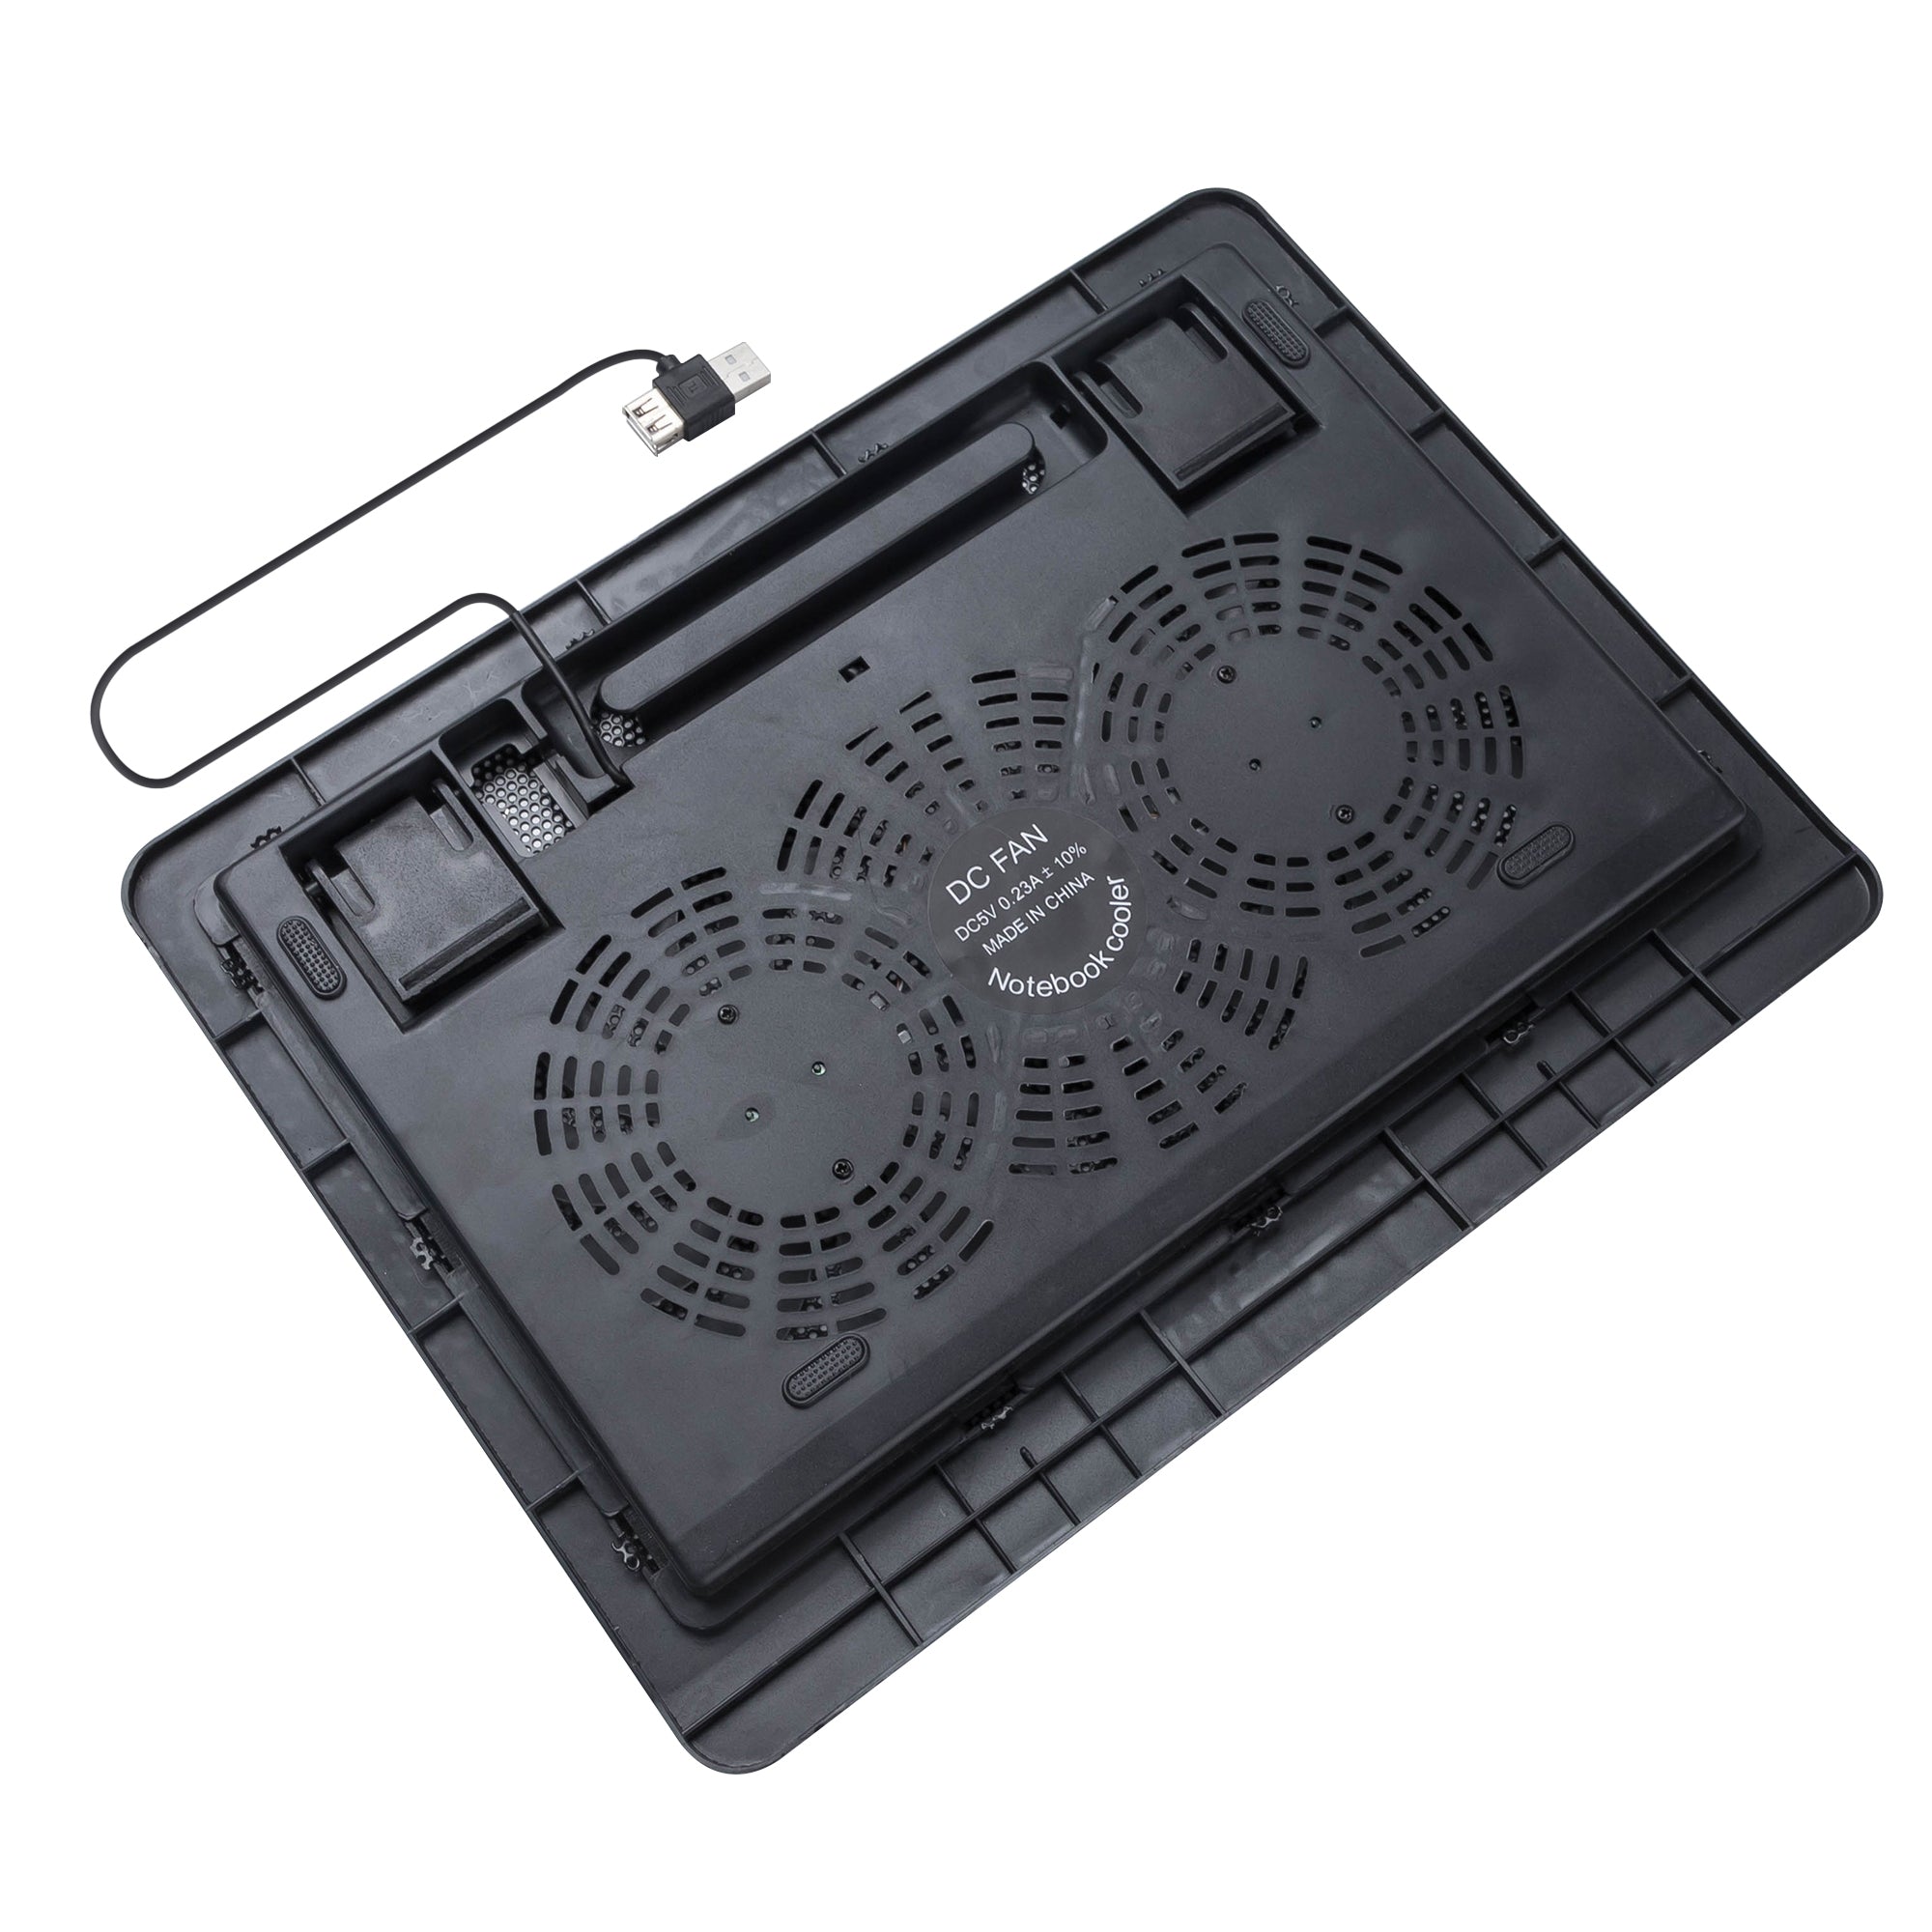 N192 Desktop Laptop Cooling Pad Notebook Heat Dissipation Stand Dual Fan Cooler